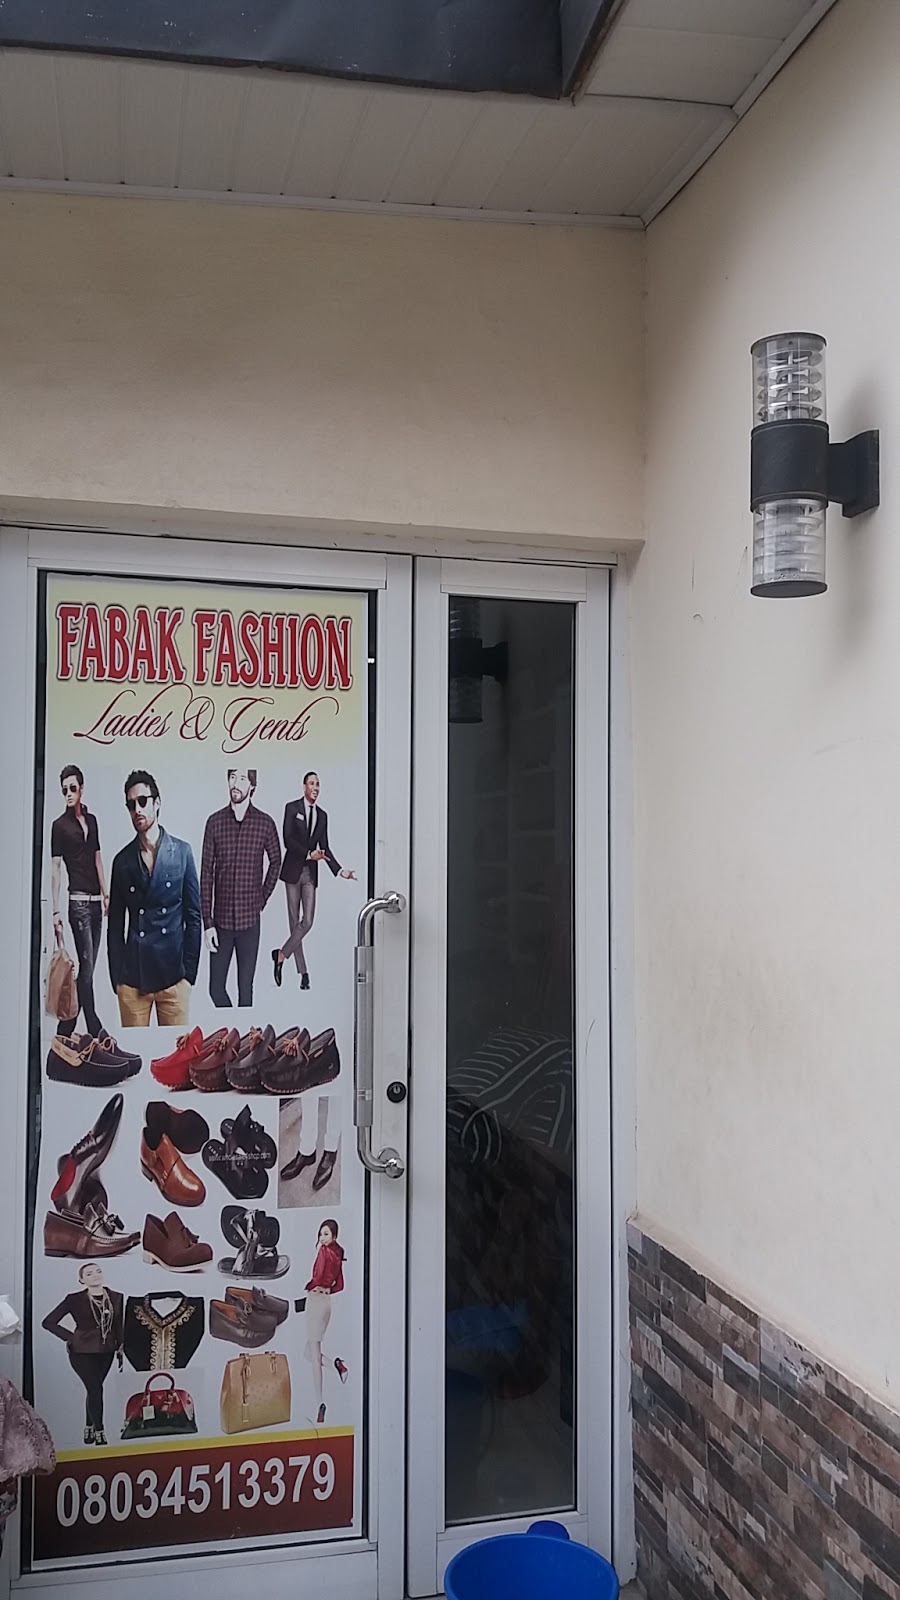 Fabak Fashion